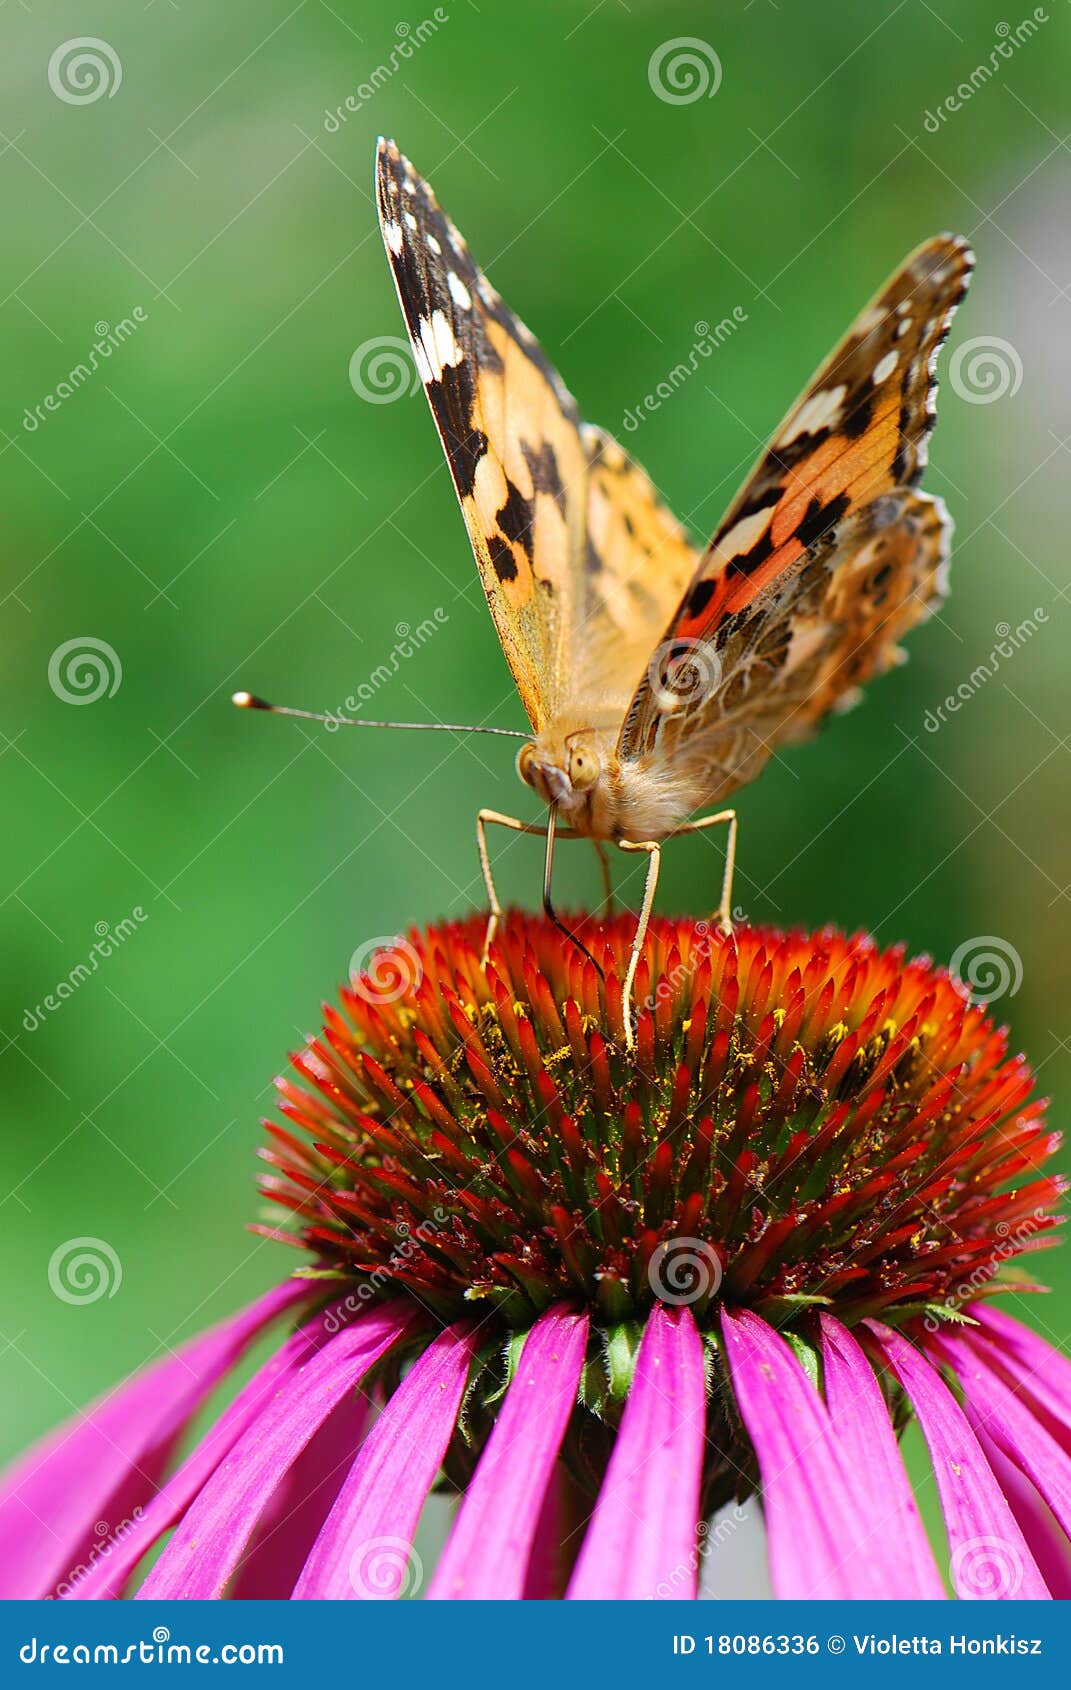 a closeup photo of a butterfly (venessa cardui)